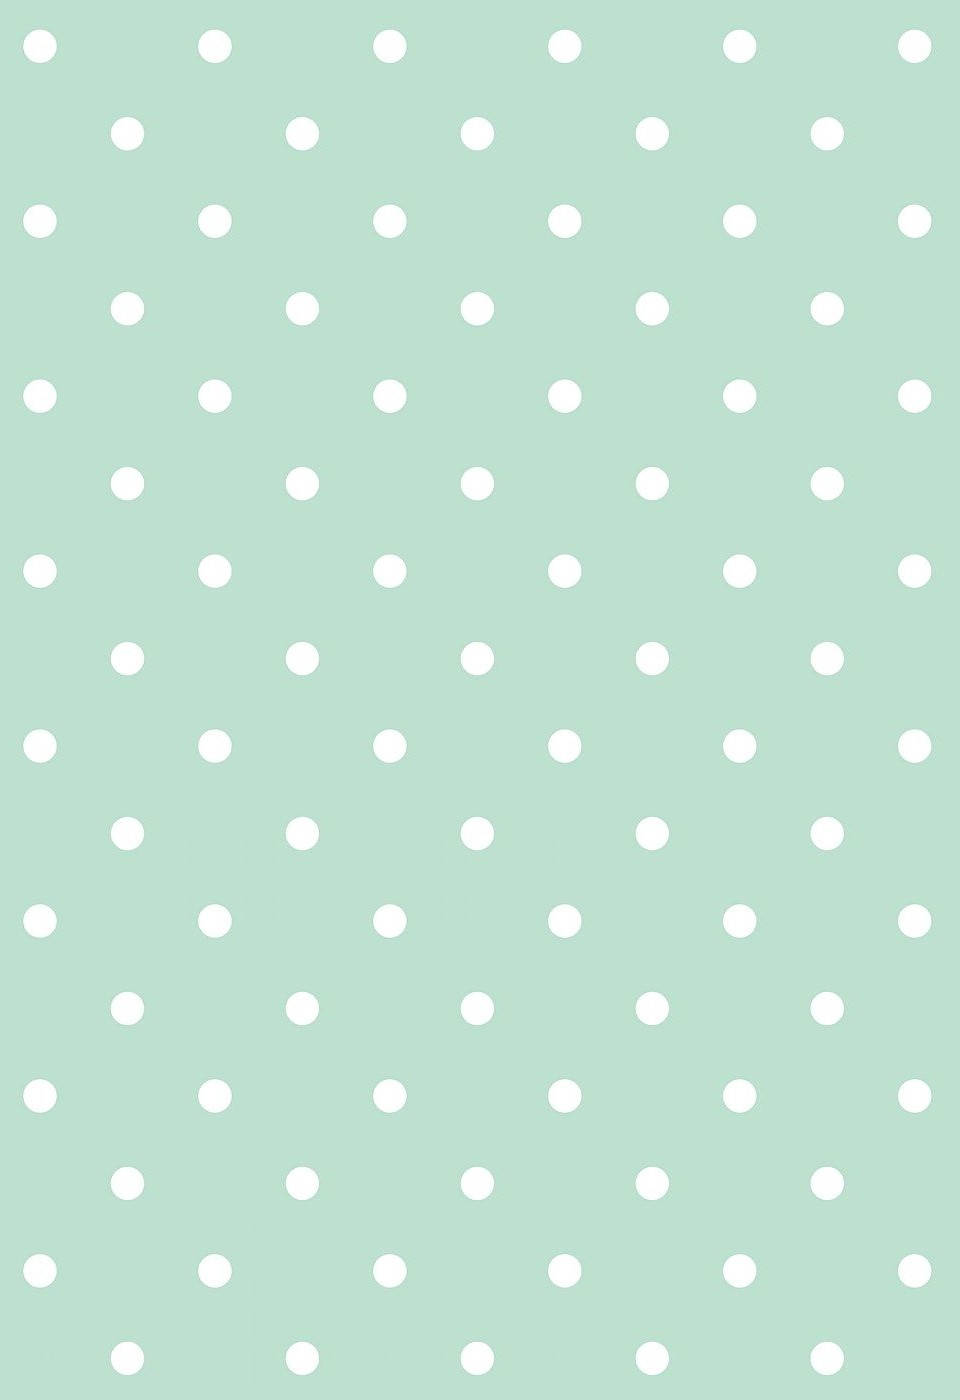 Mint Green Polka Dots Background